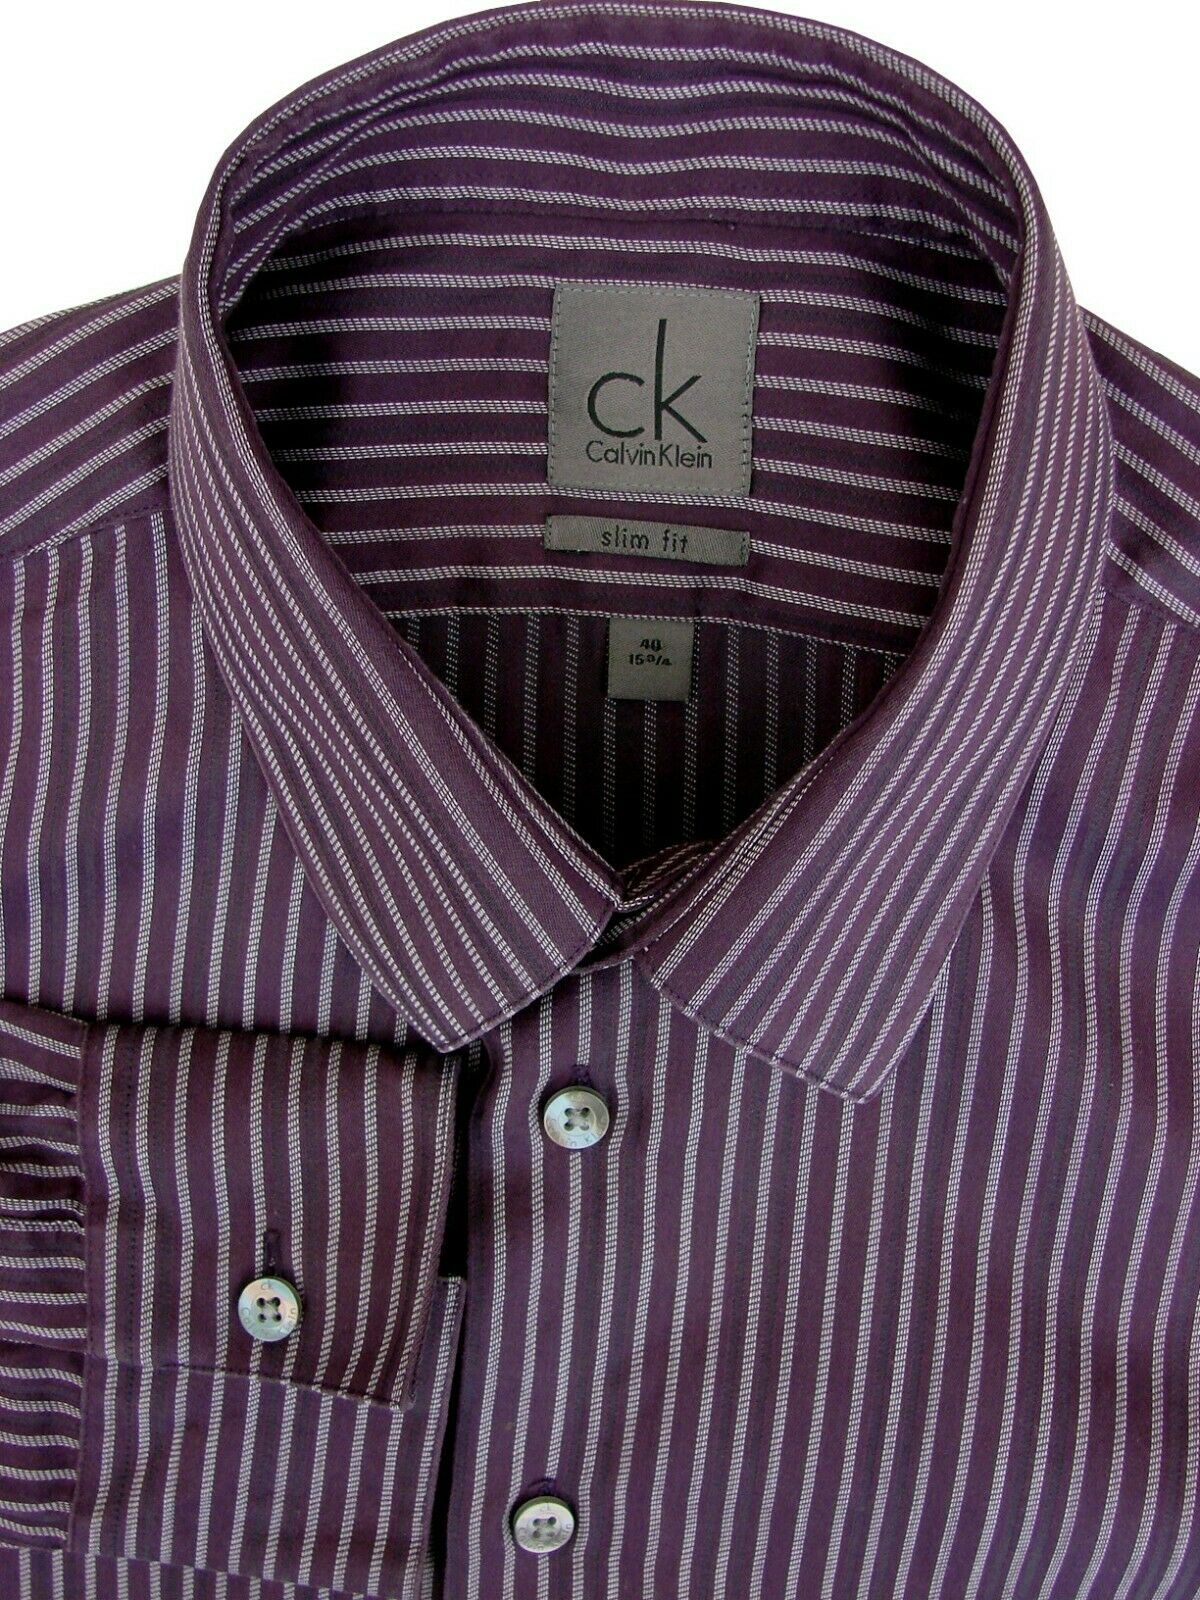 calvin klein shirt purple